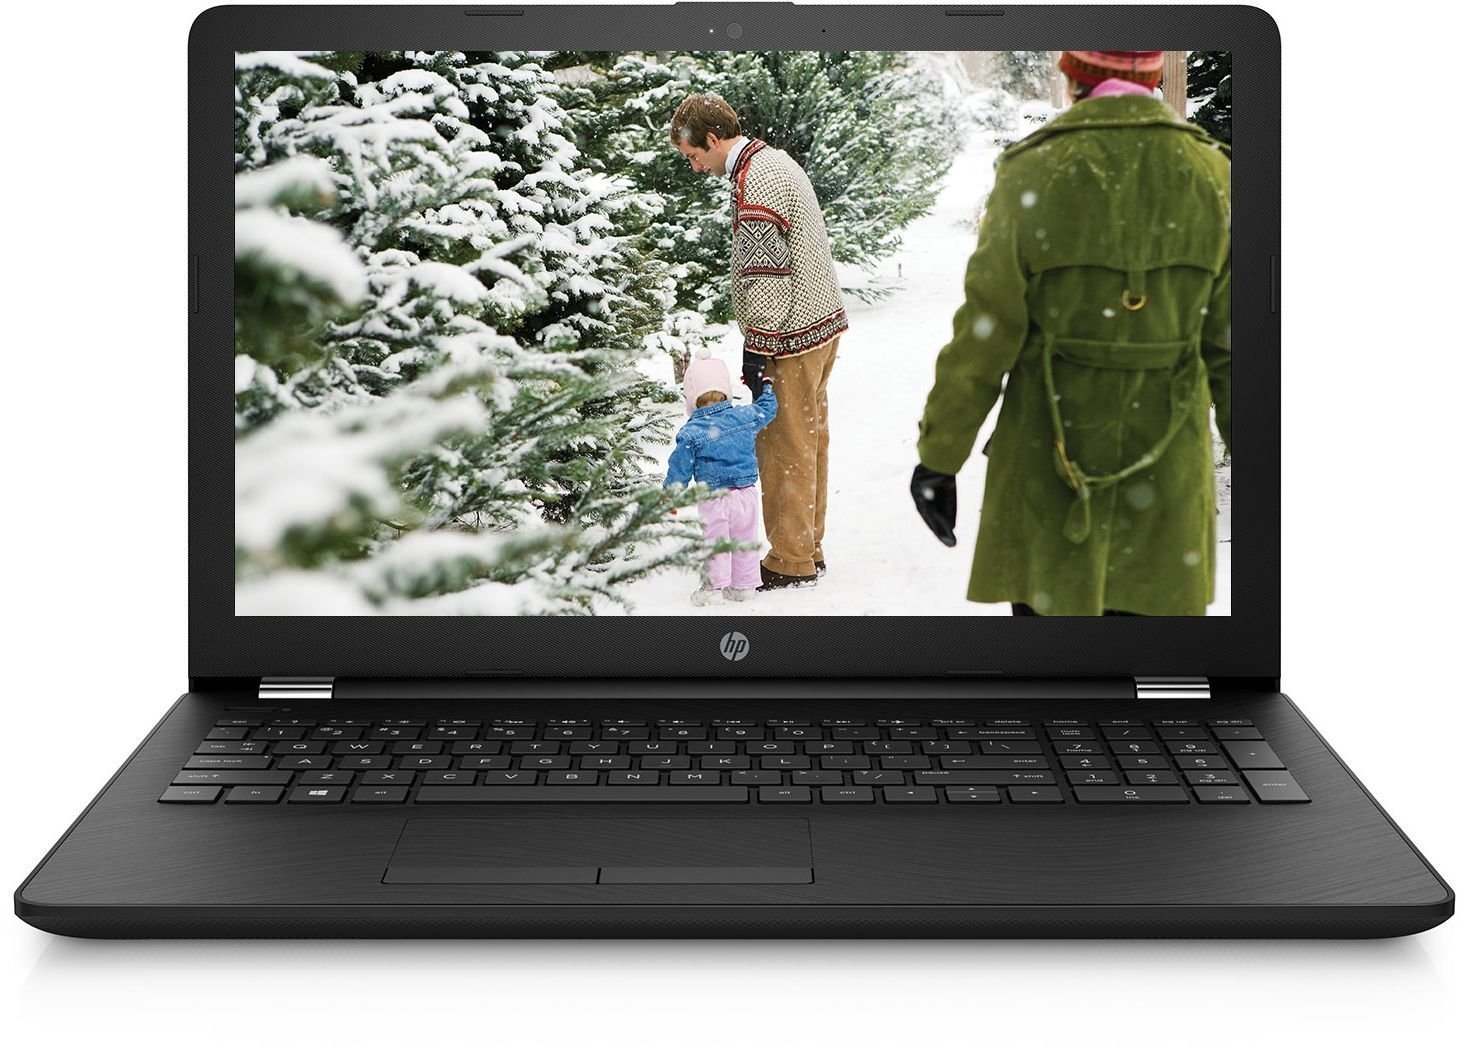 HP 15-bs654TU 15.6-inch Laptop (7th Gen Core i3-7100U/4GB/1TB/15.6 Full HD Display / Windows 10 Home, Integrated Graphics),